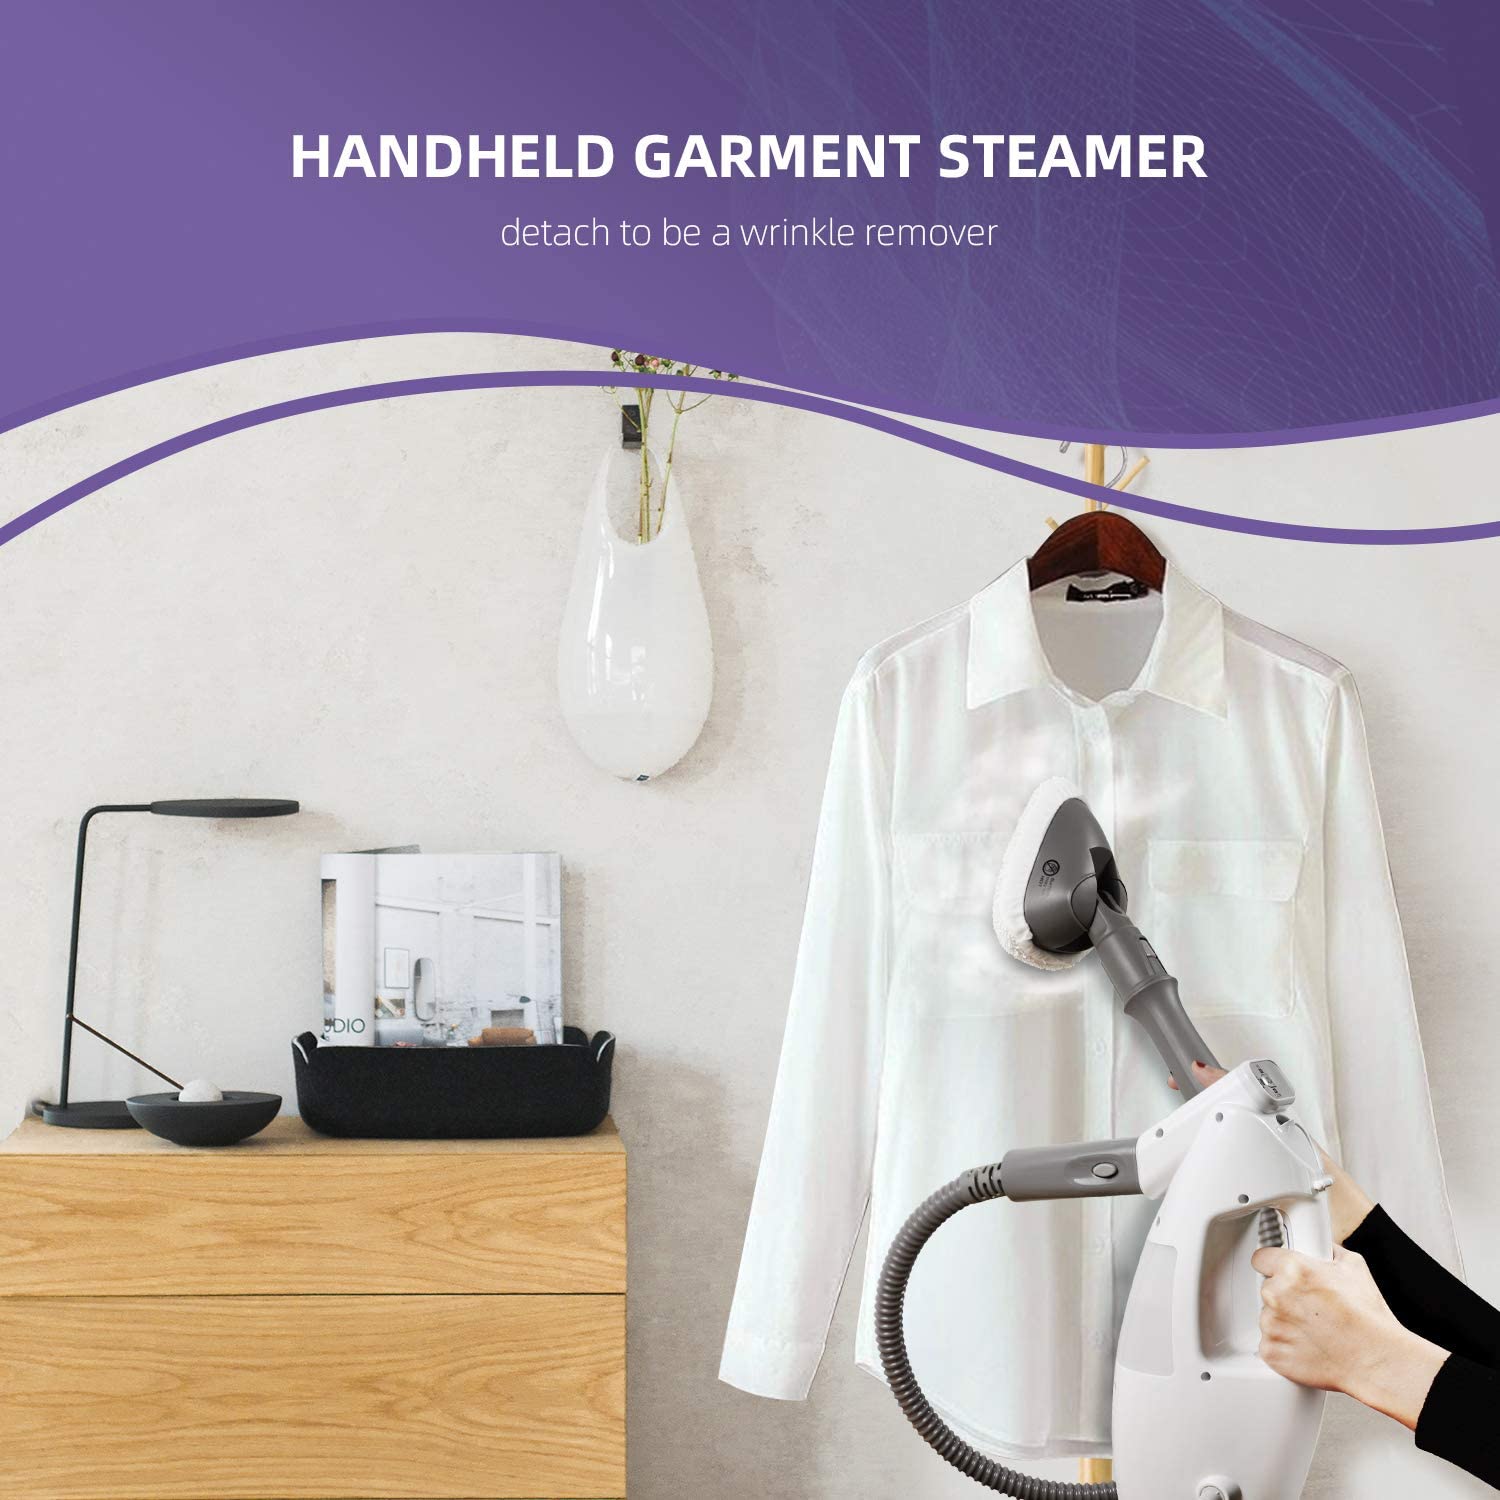 LIGHT 'N' EASY Multi-Functional steam mop Steamer for Cleaning Hardwood Floor Cleaner for Tile Grout Laminate Ceramic, 7688ANW, White - image 4 of 8